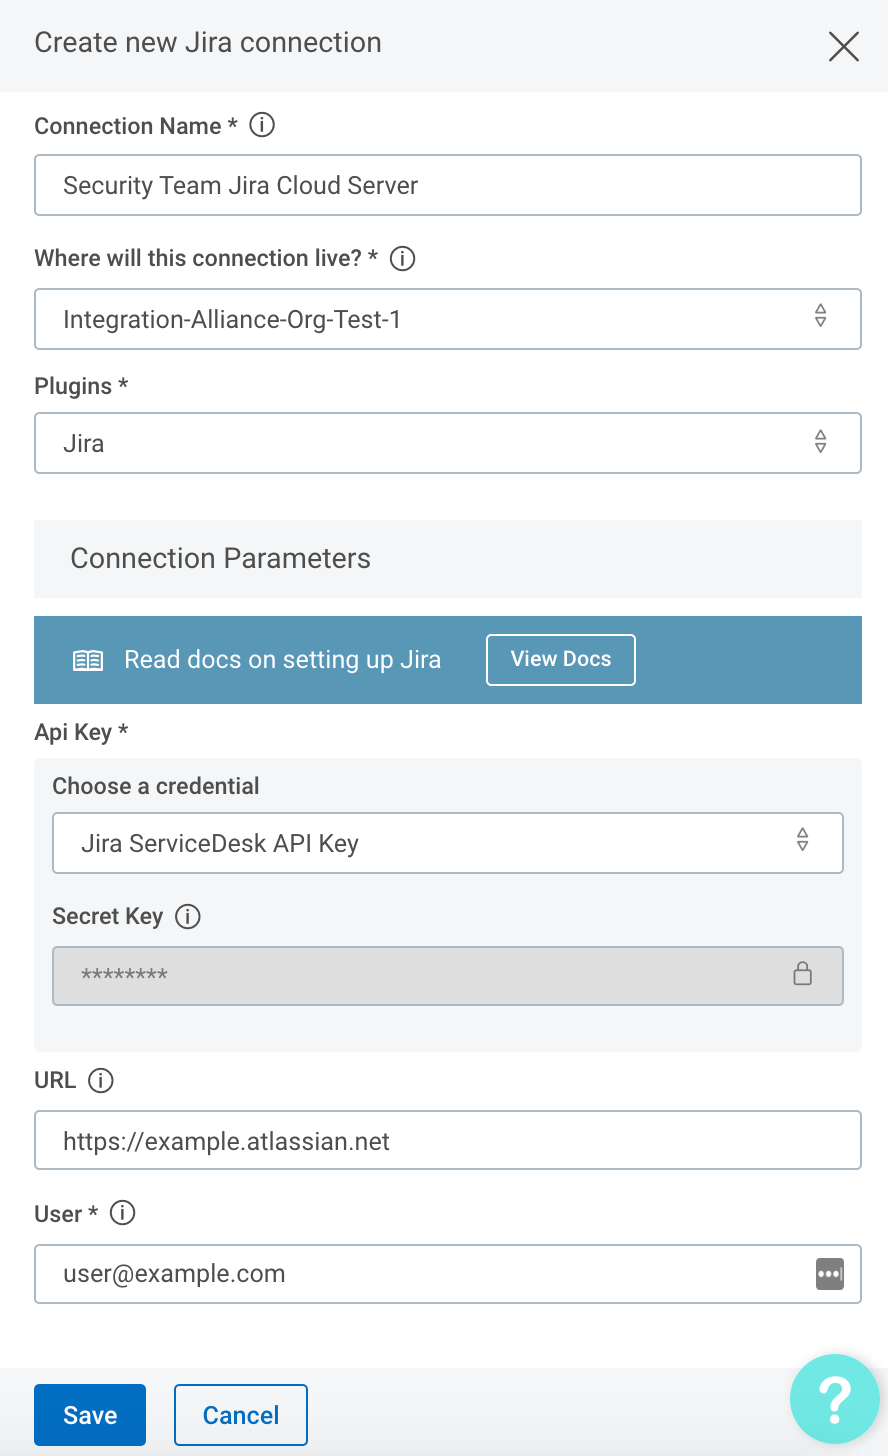 Configure Connection for Jira Cloud